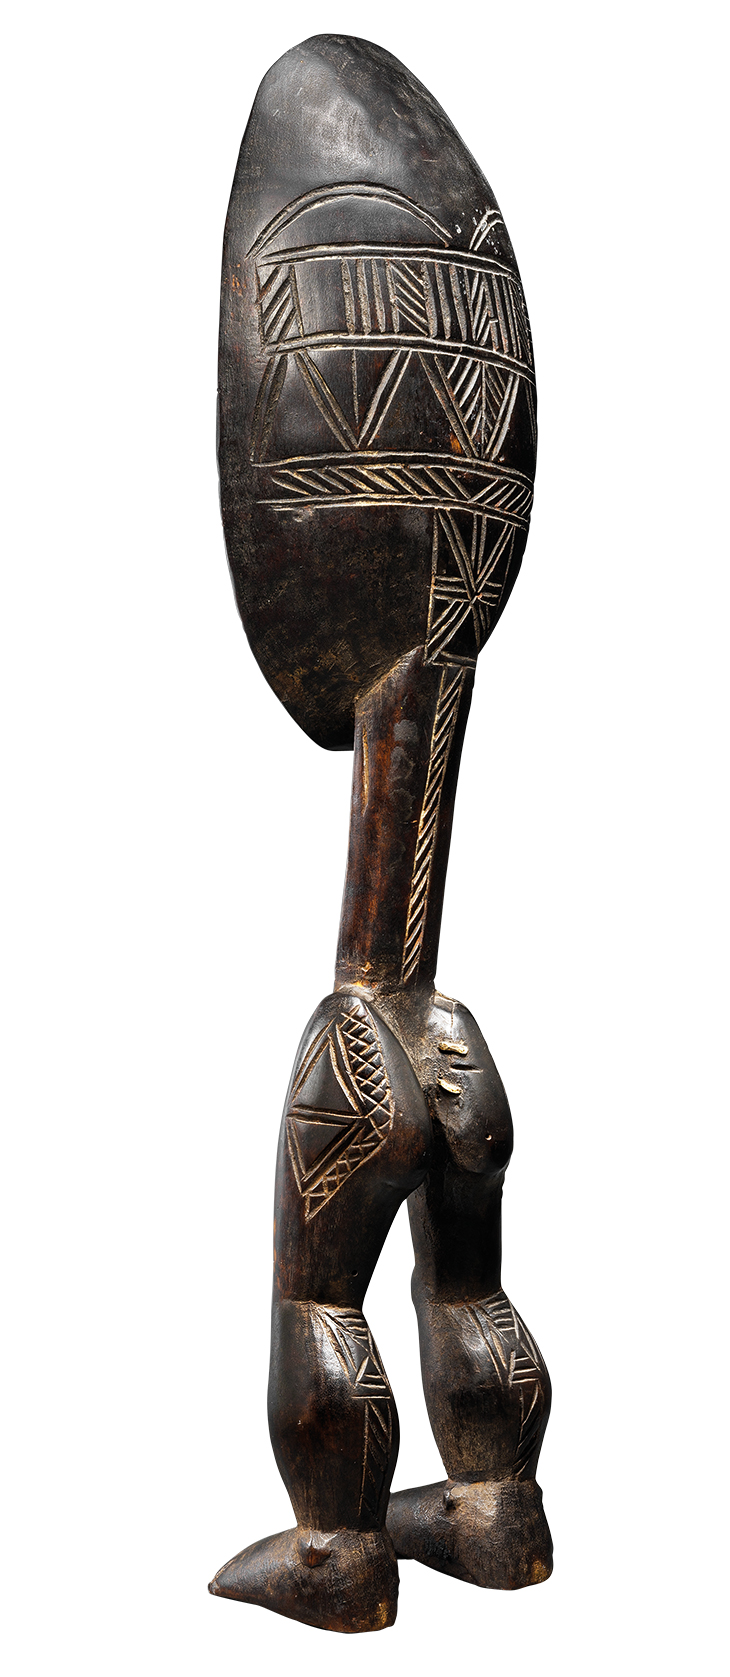 Anthropomorphic spoon (late 19th century), Dan people, Ivory Coast.